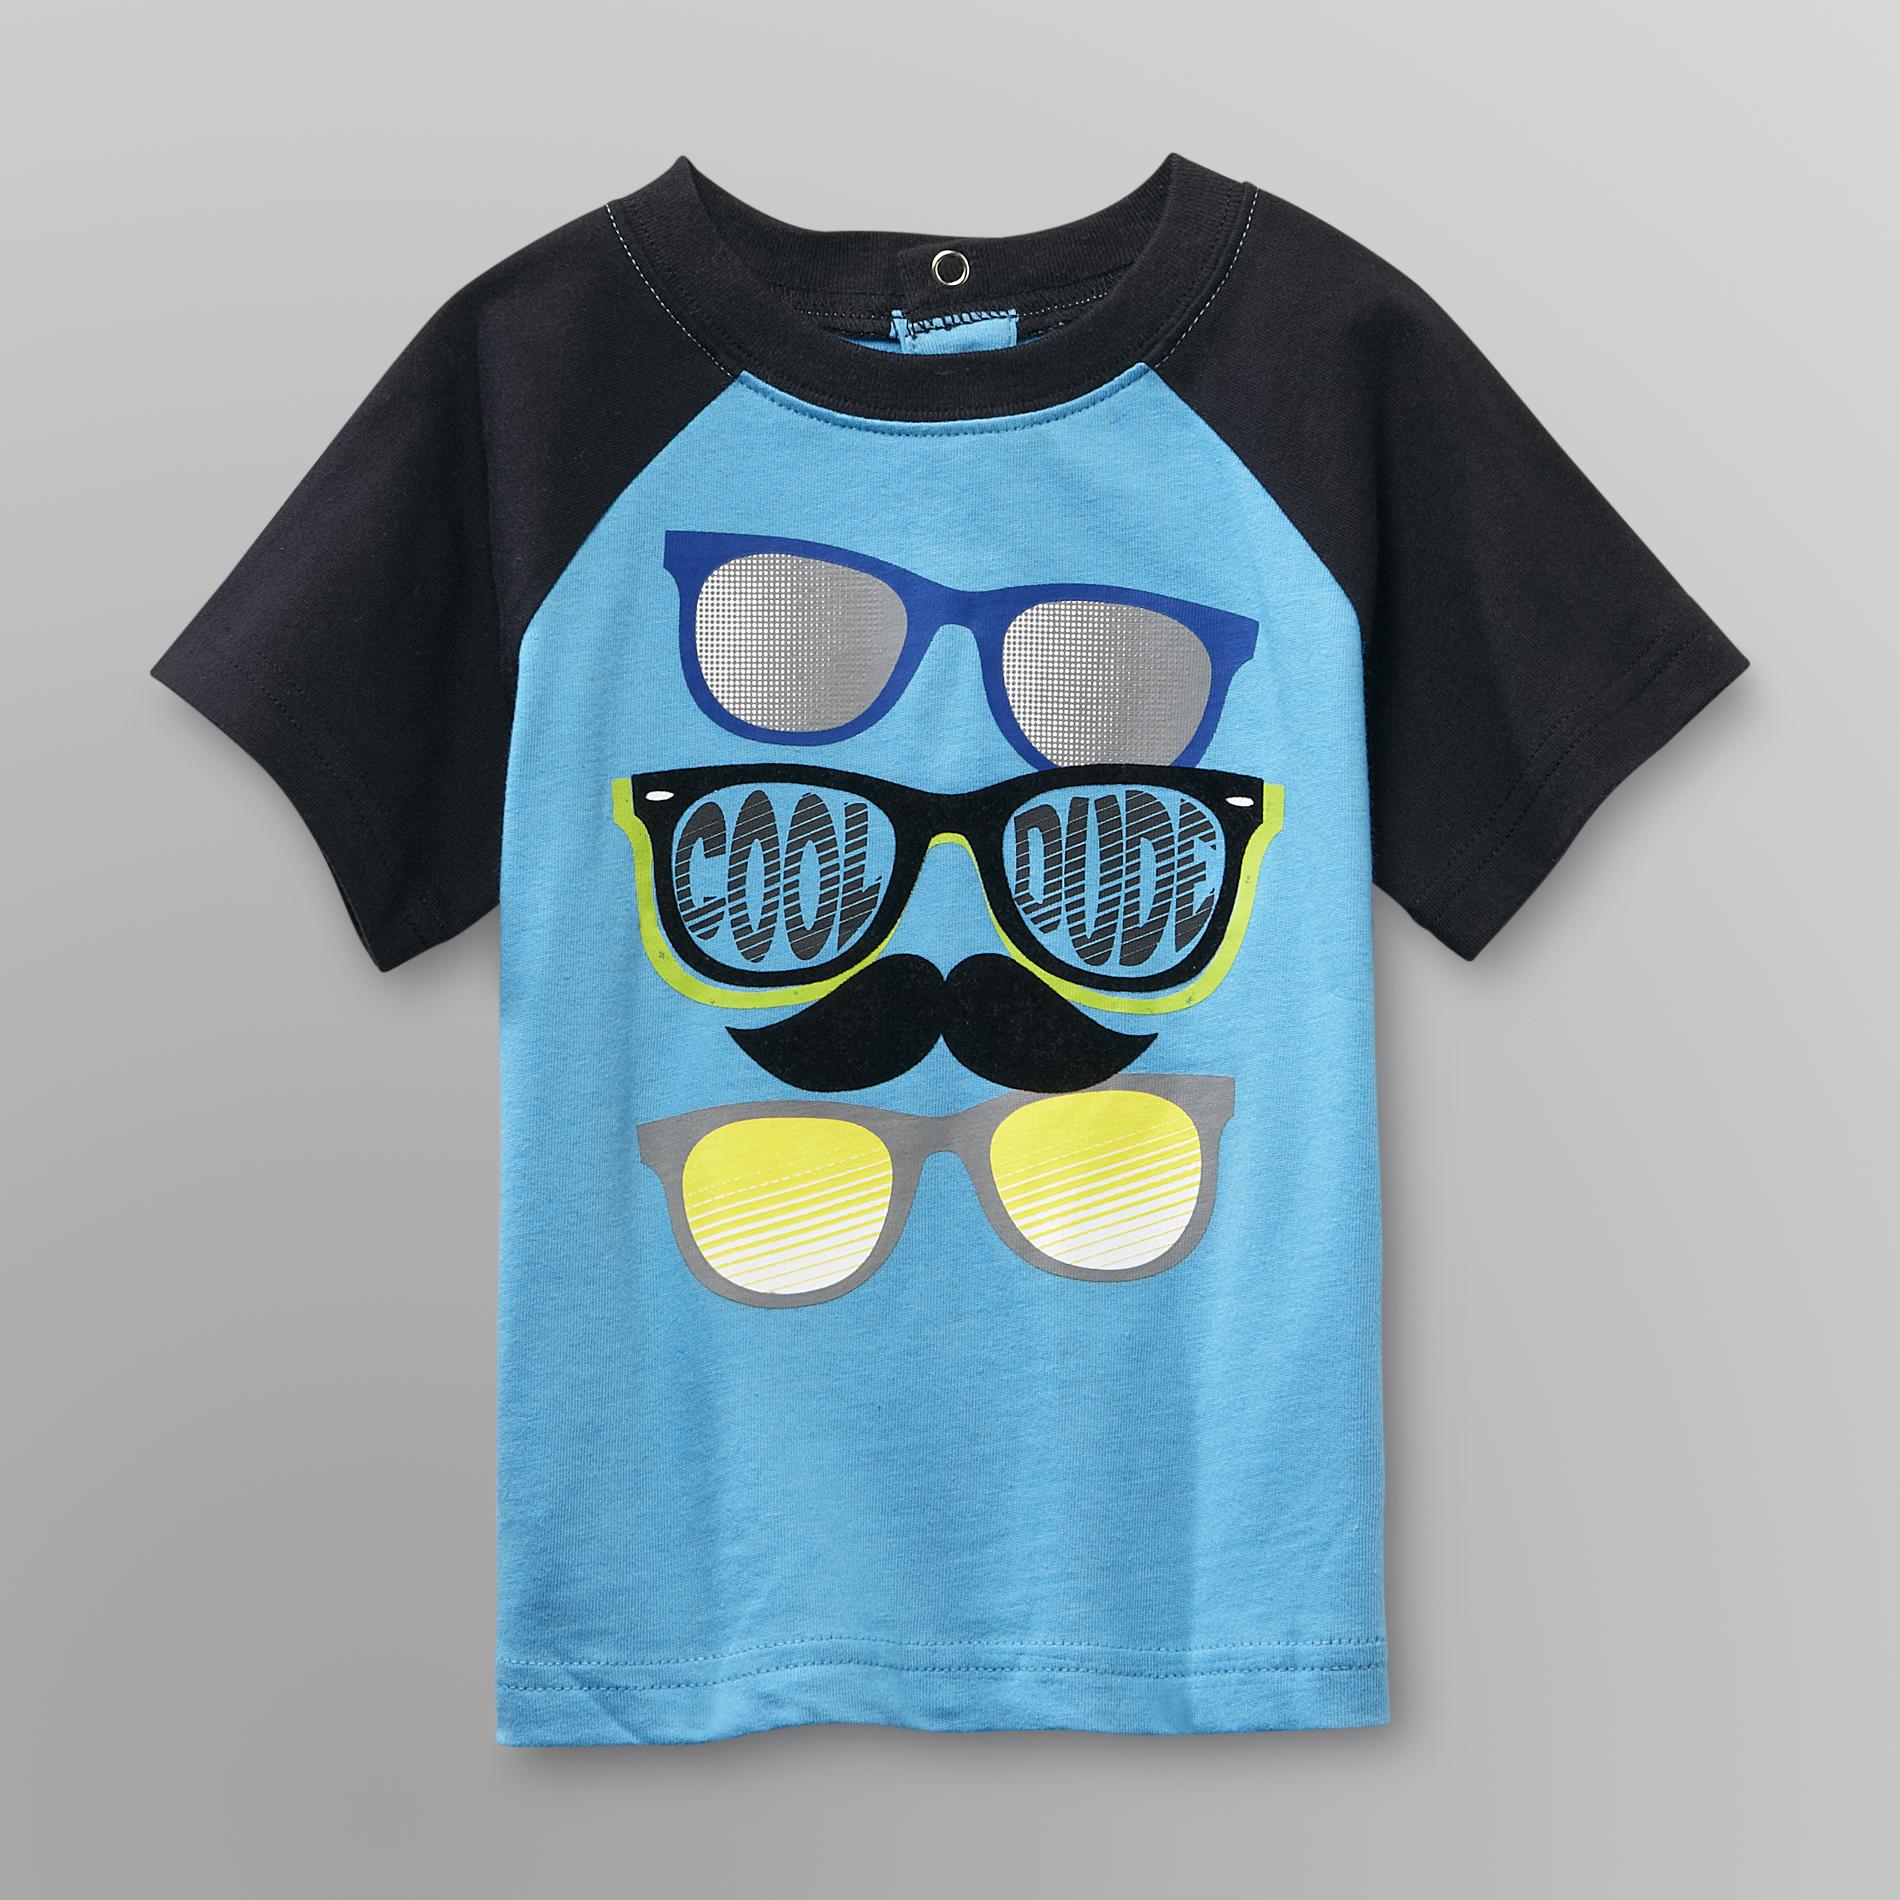 WonderKids Infant & Toddler Boy's Graphic T-Shirt - Cool Dude